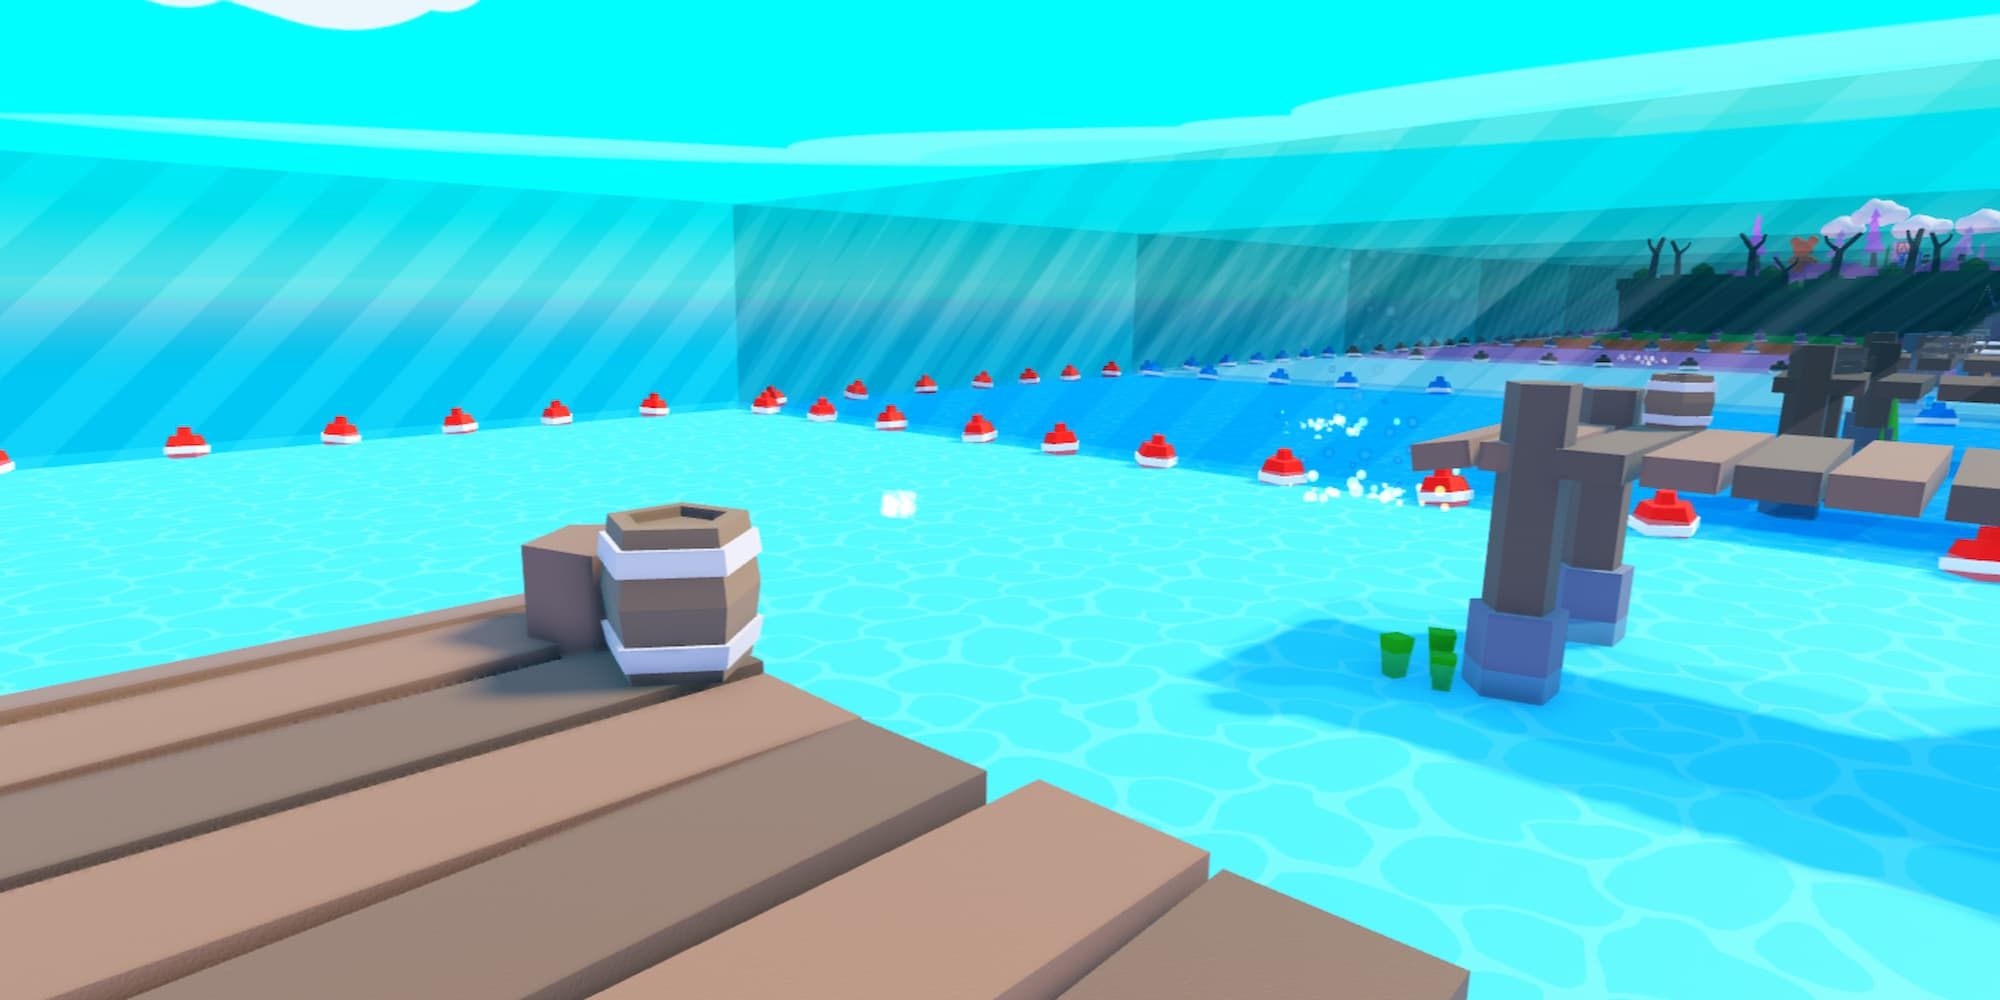 Roblox - Códigos do Fishing Frenzy Simulator (dezembro 2023